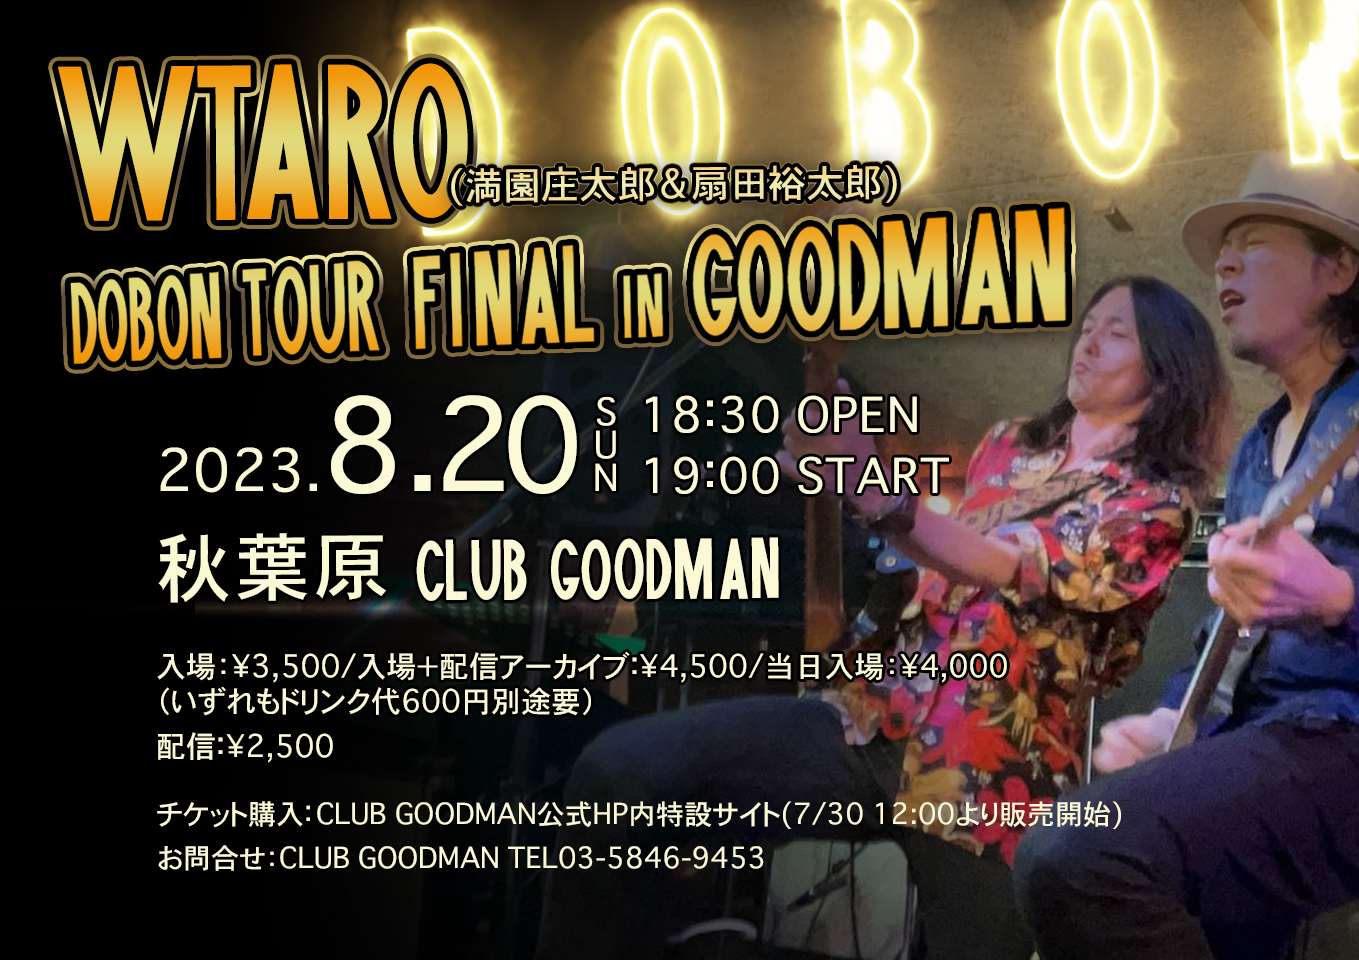 WTARO DOBON TOUR FINAL IN TOKYO